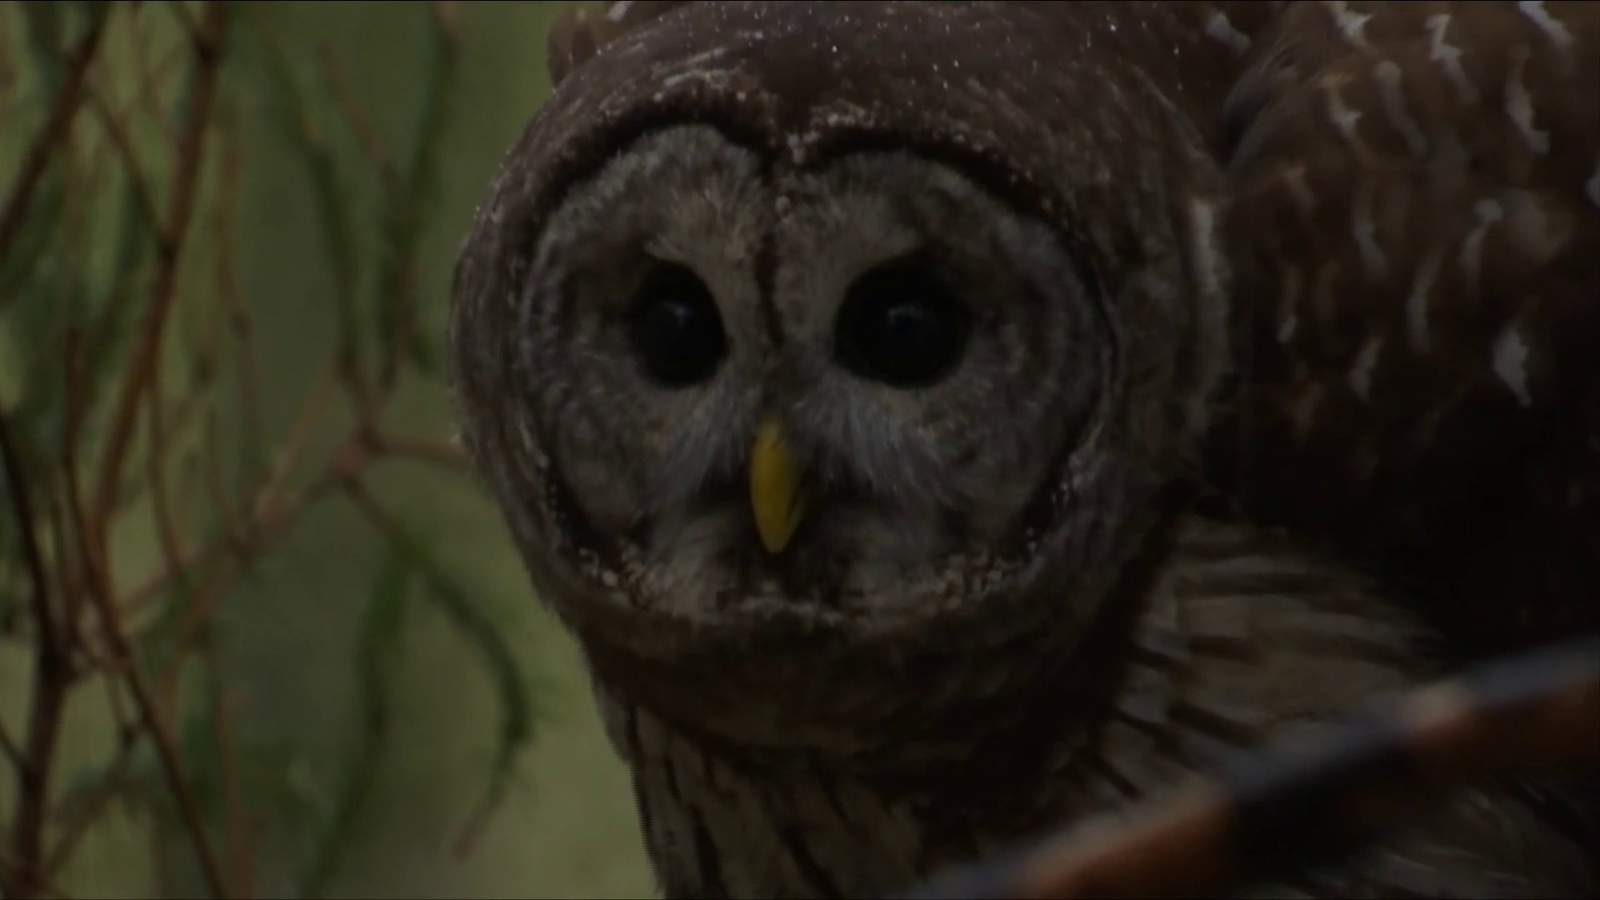 Injured owl ready to fly again thanks to Southwest Virginia Wildlife Center